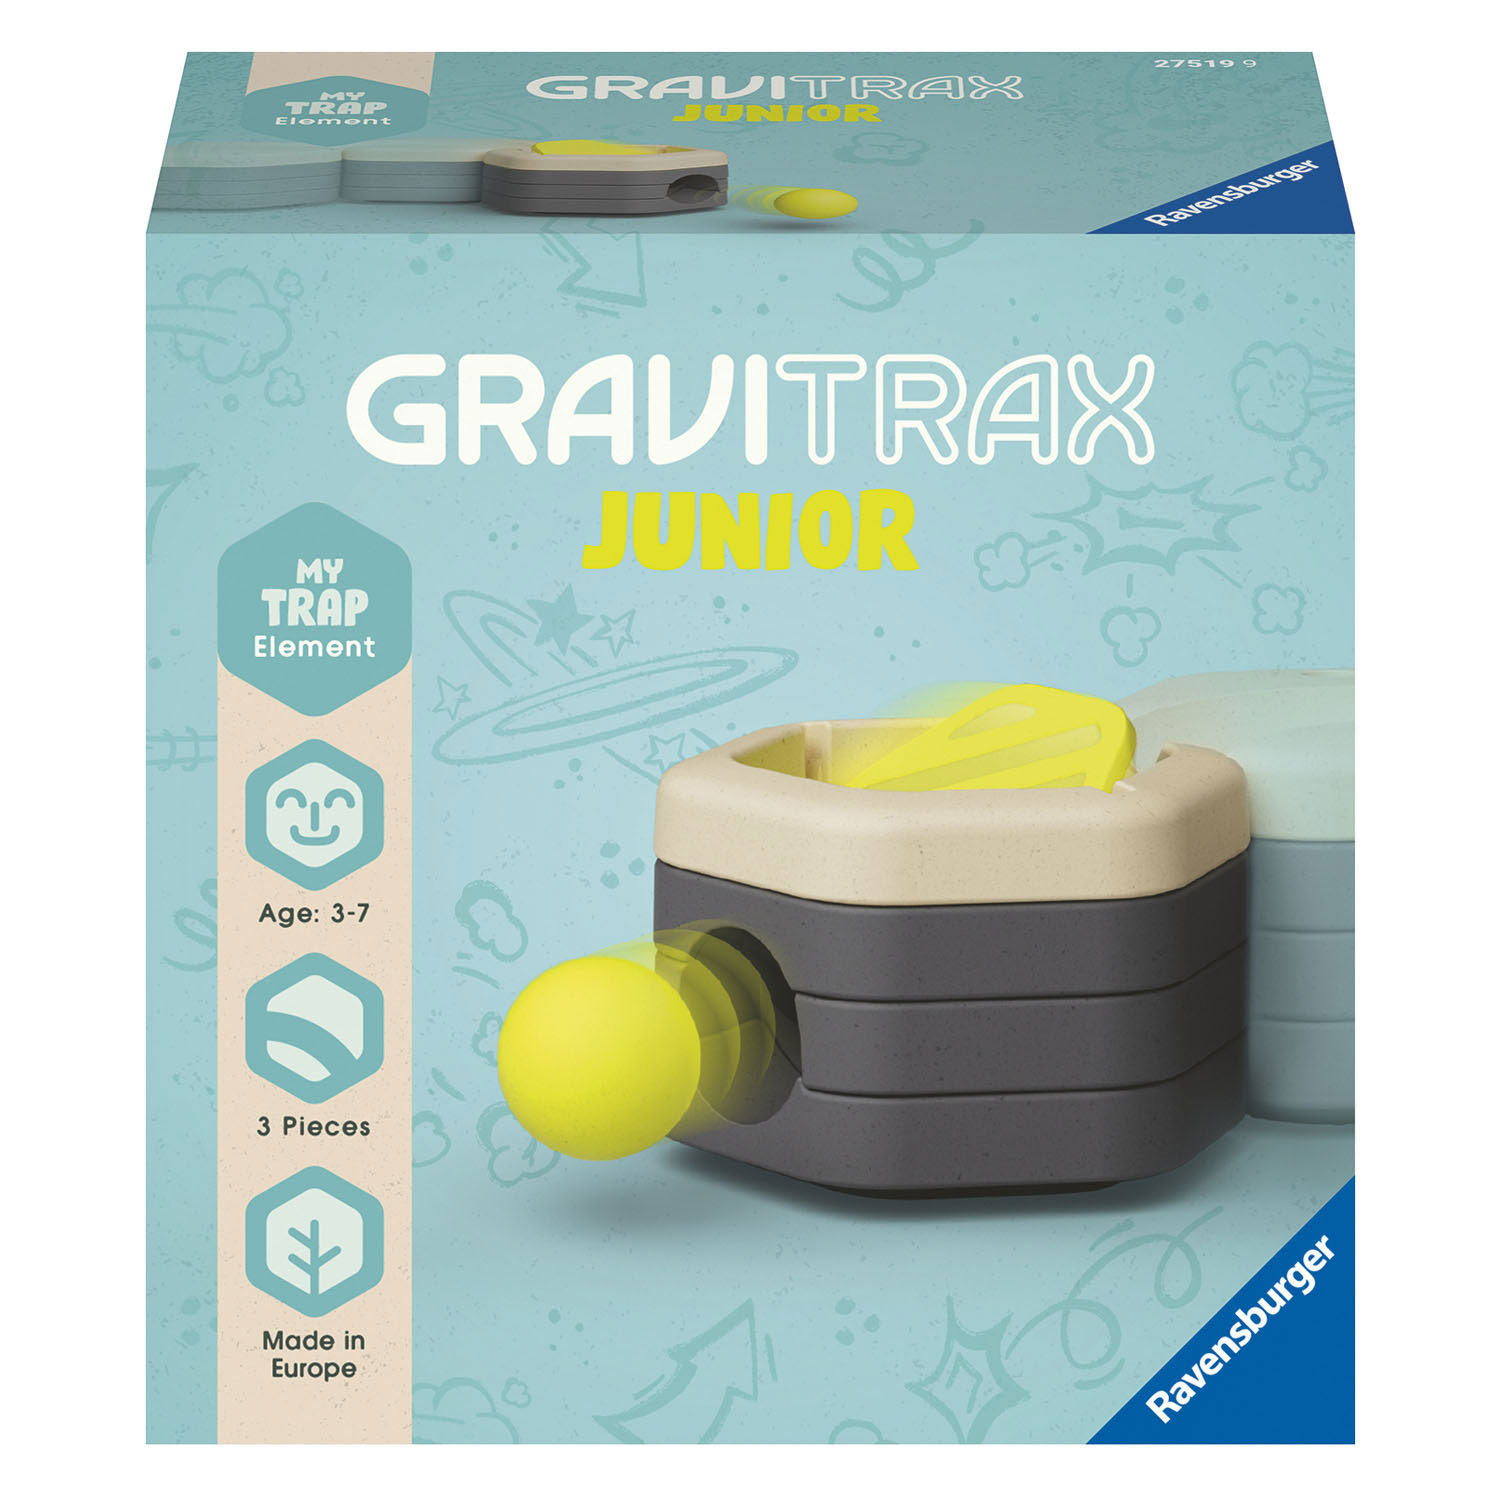 Ravensburger GraviTrax Junior Extension Ice